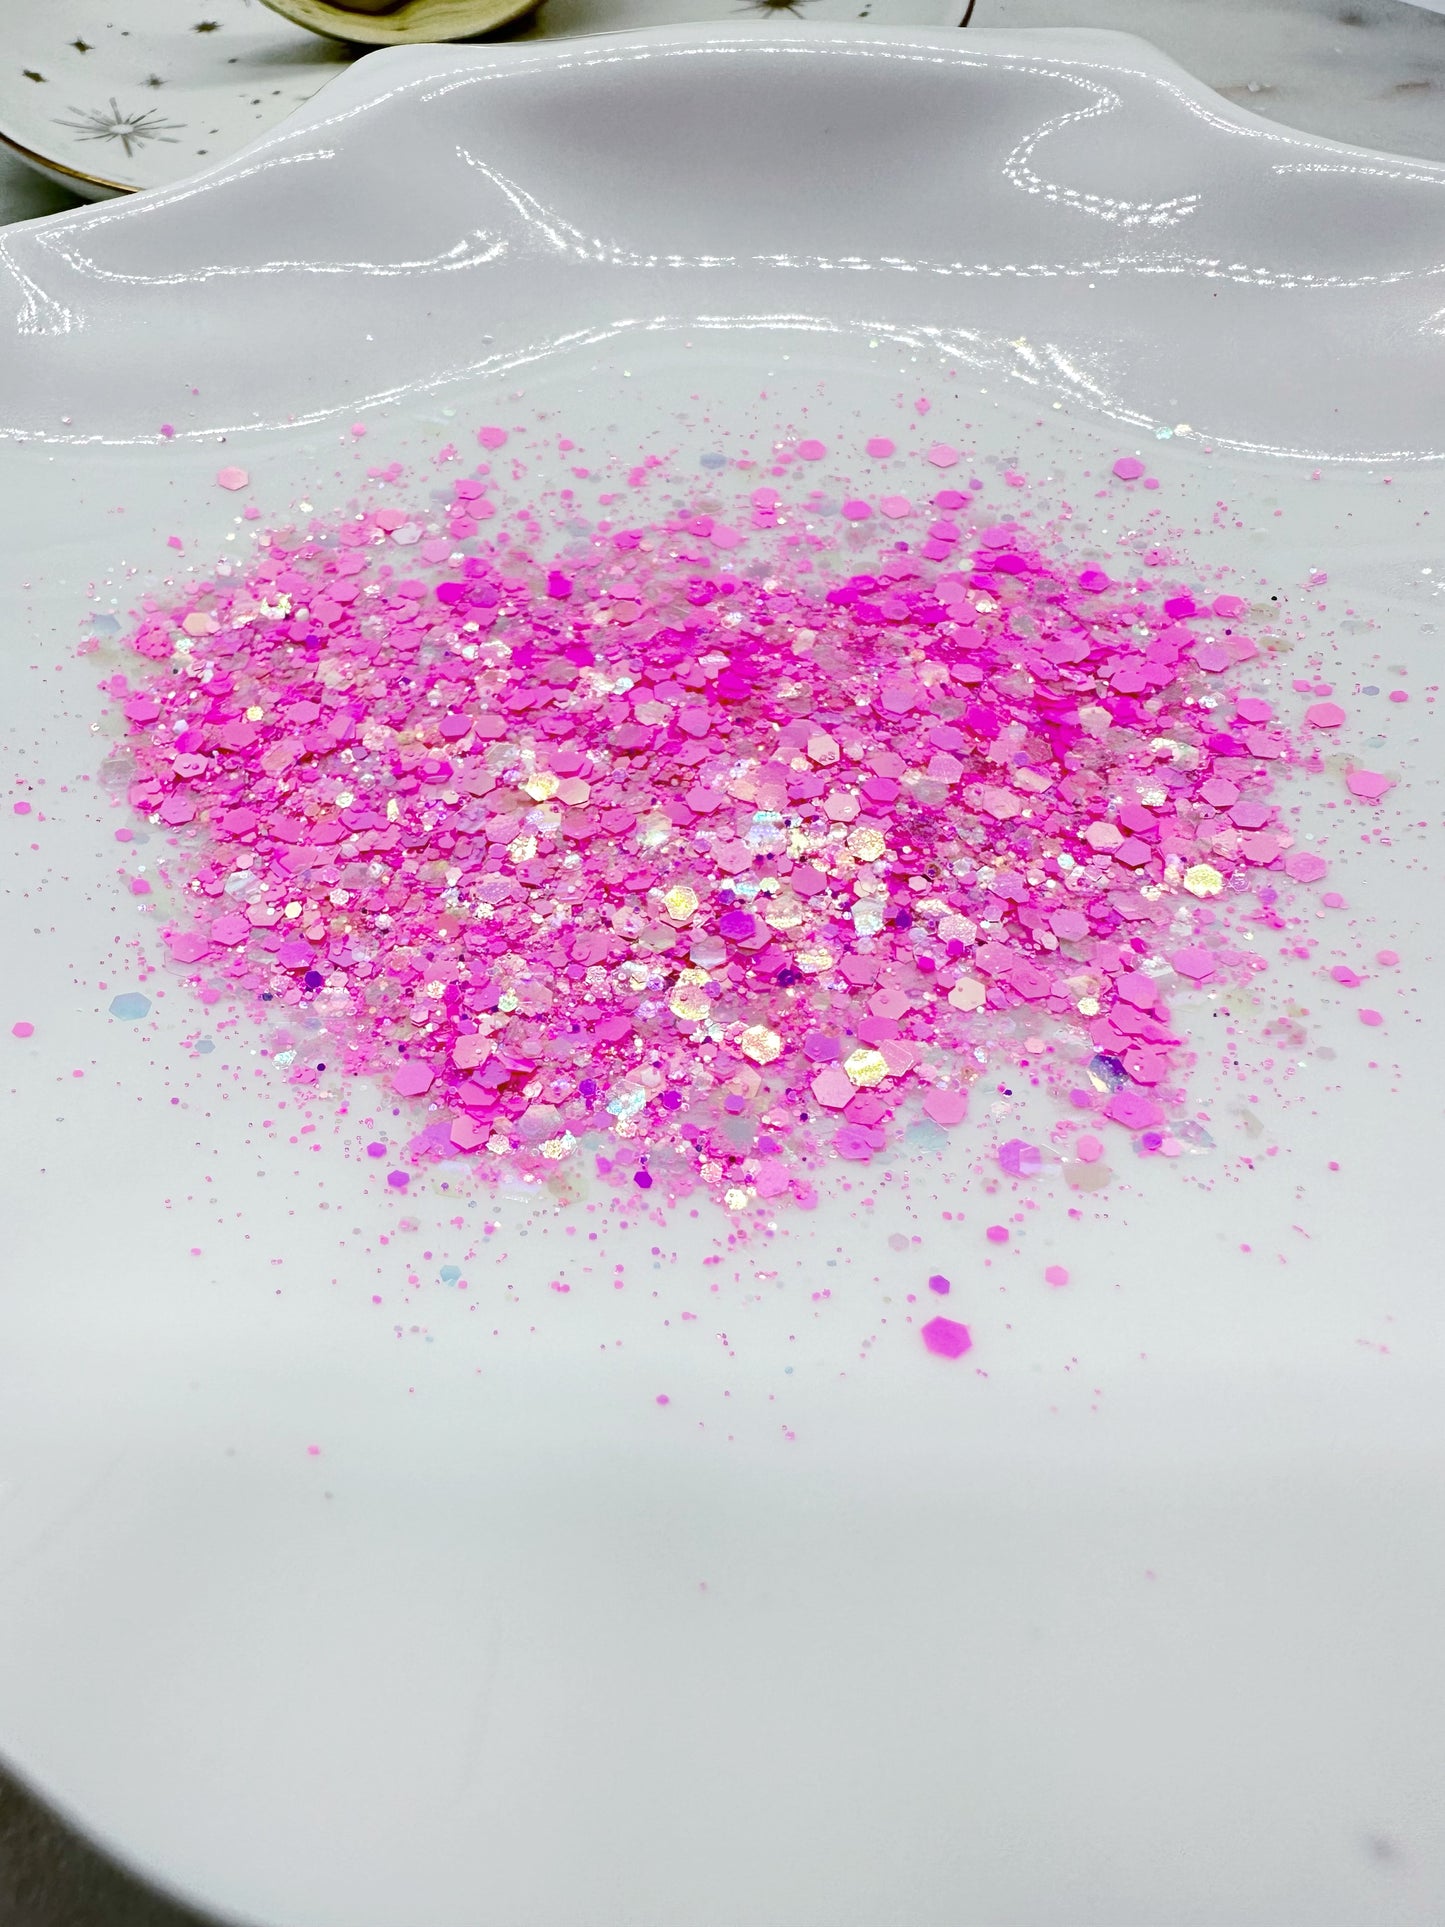 10g Fuchsia Party Prism Magic Glitter Mix